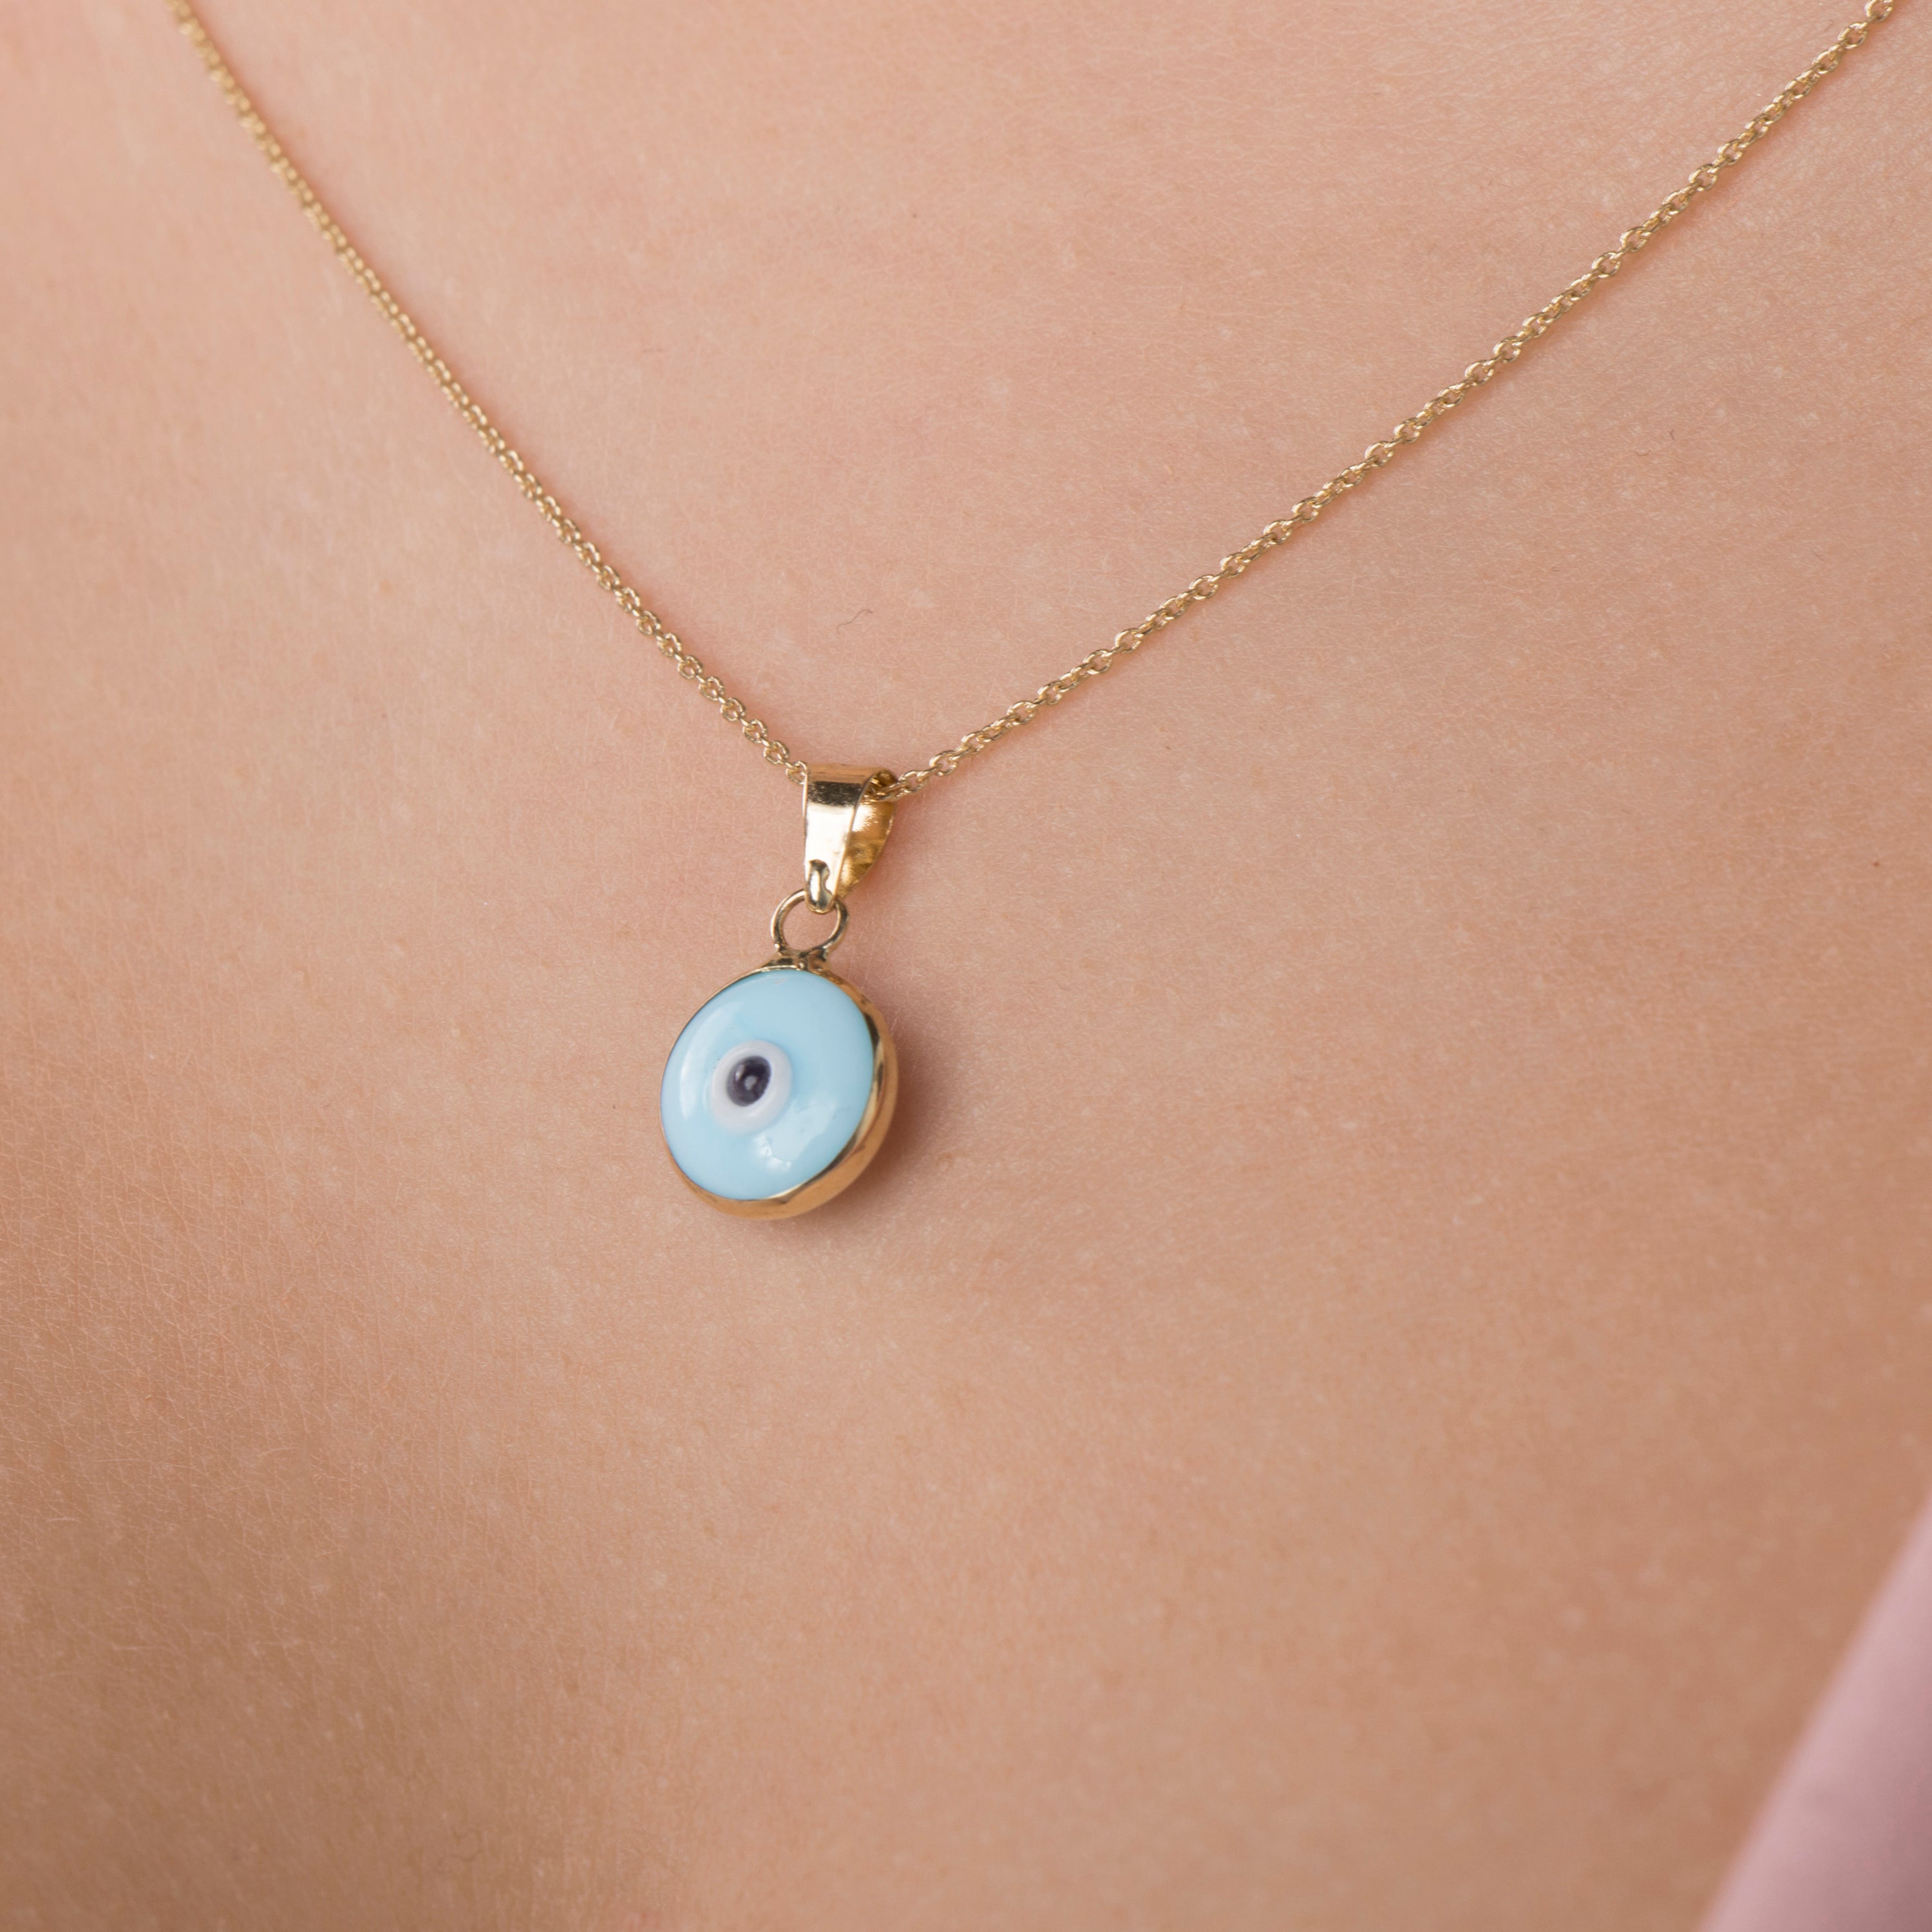 Baby Blue Evil Eye Pendant Necklace in 14K Gold